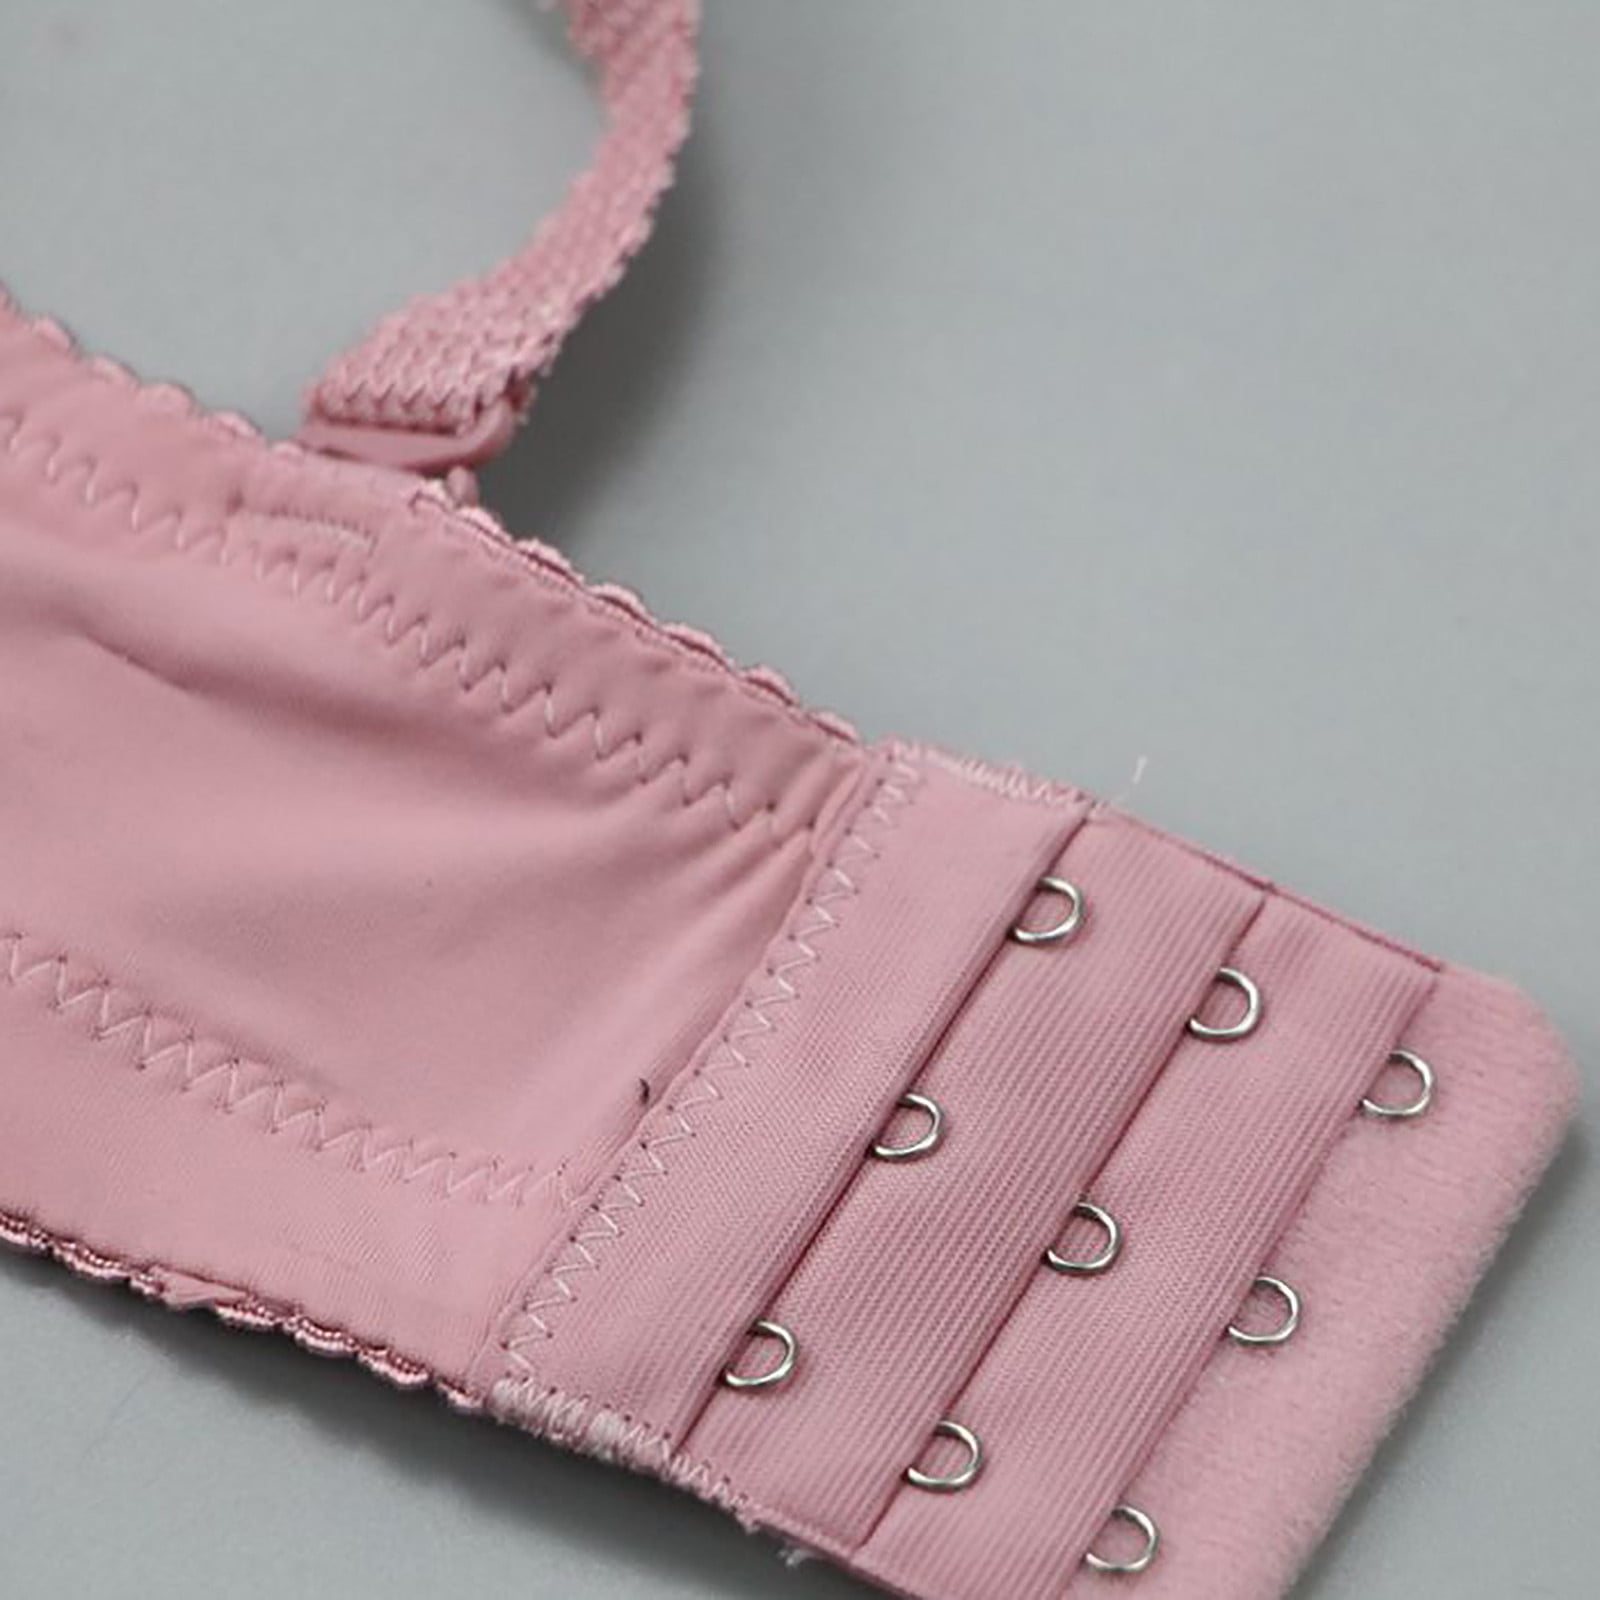 Buy Bodycave Baby Pink Woman Comfort Feel Bra Panty Set,Pack of 1